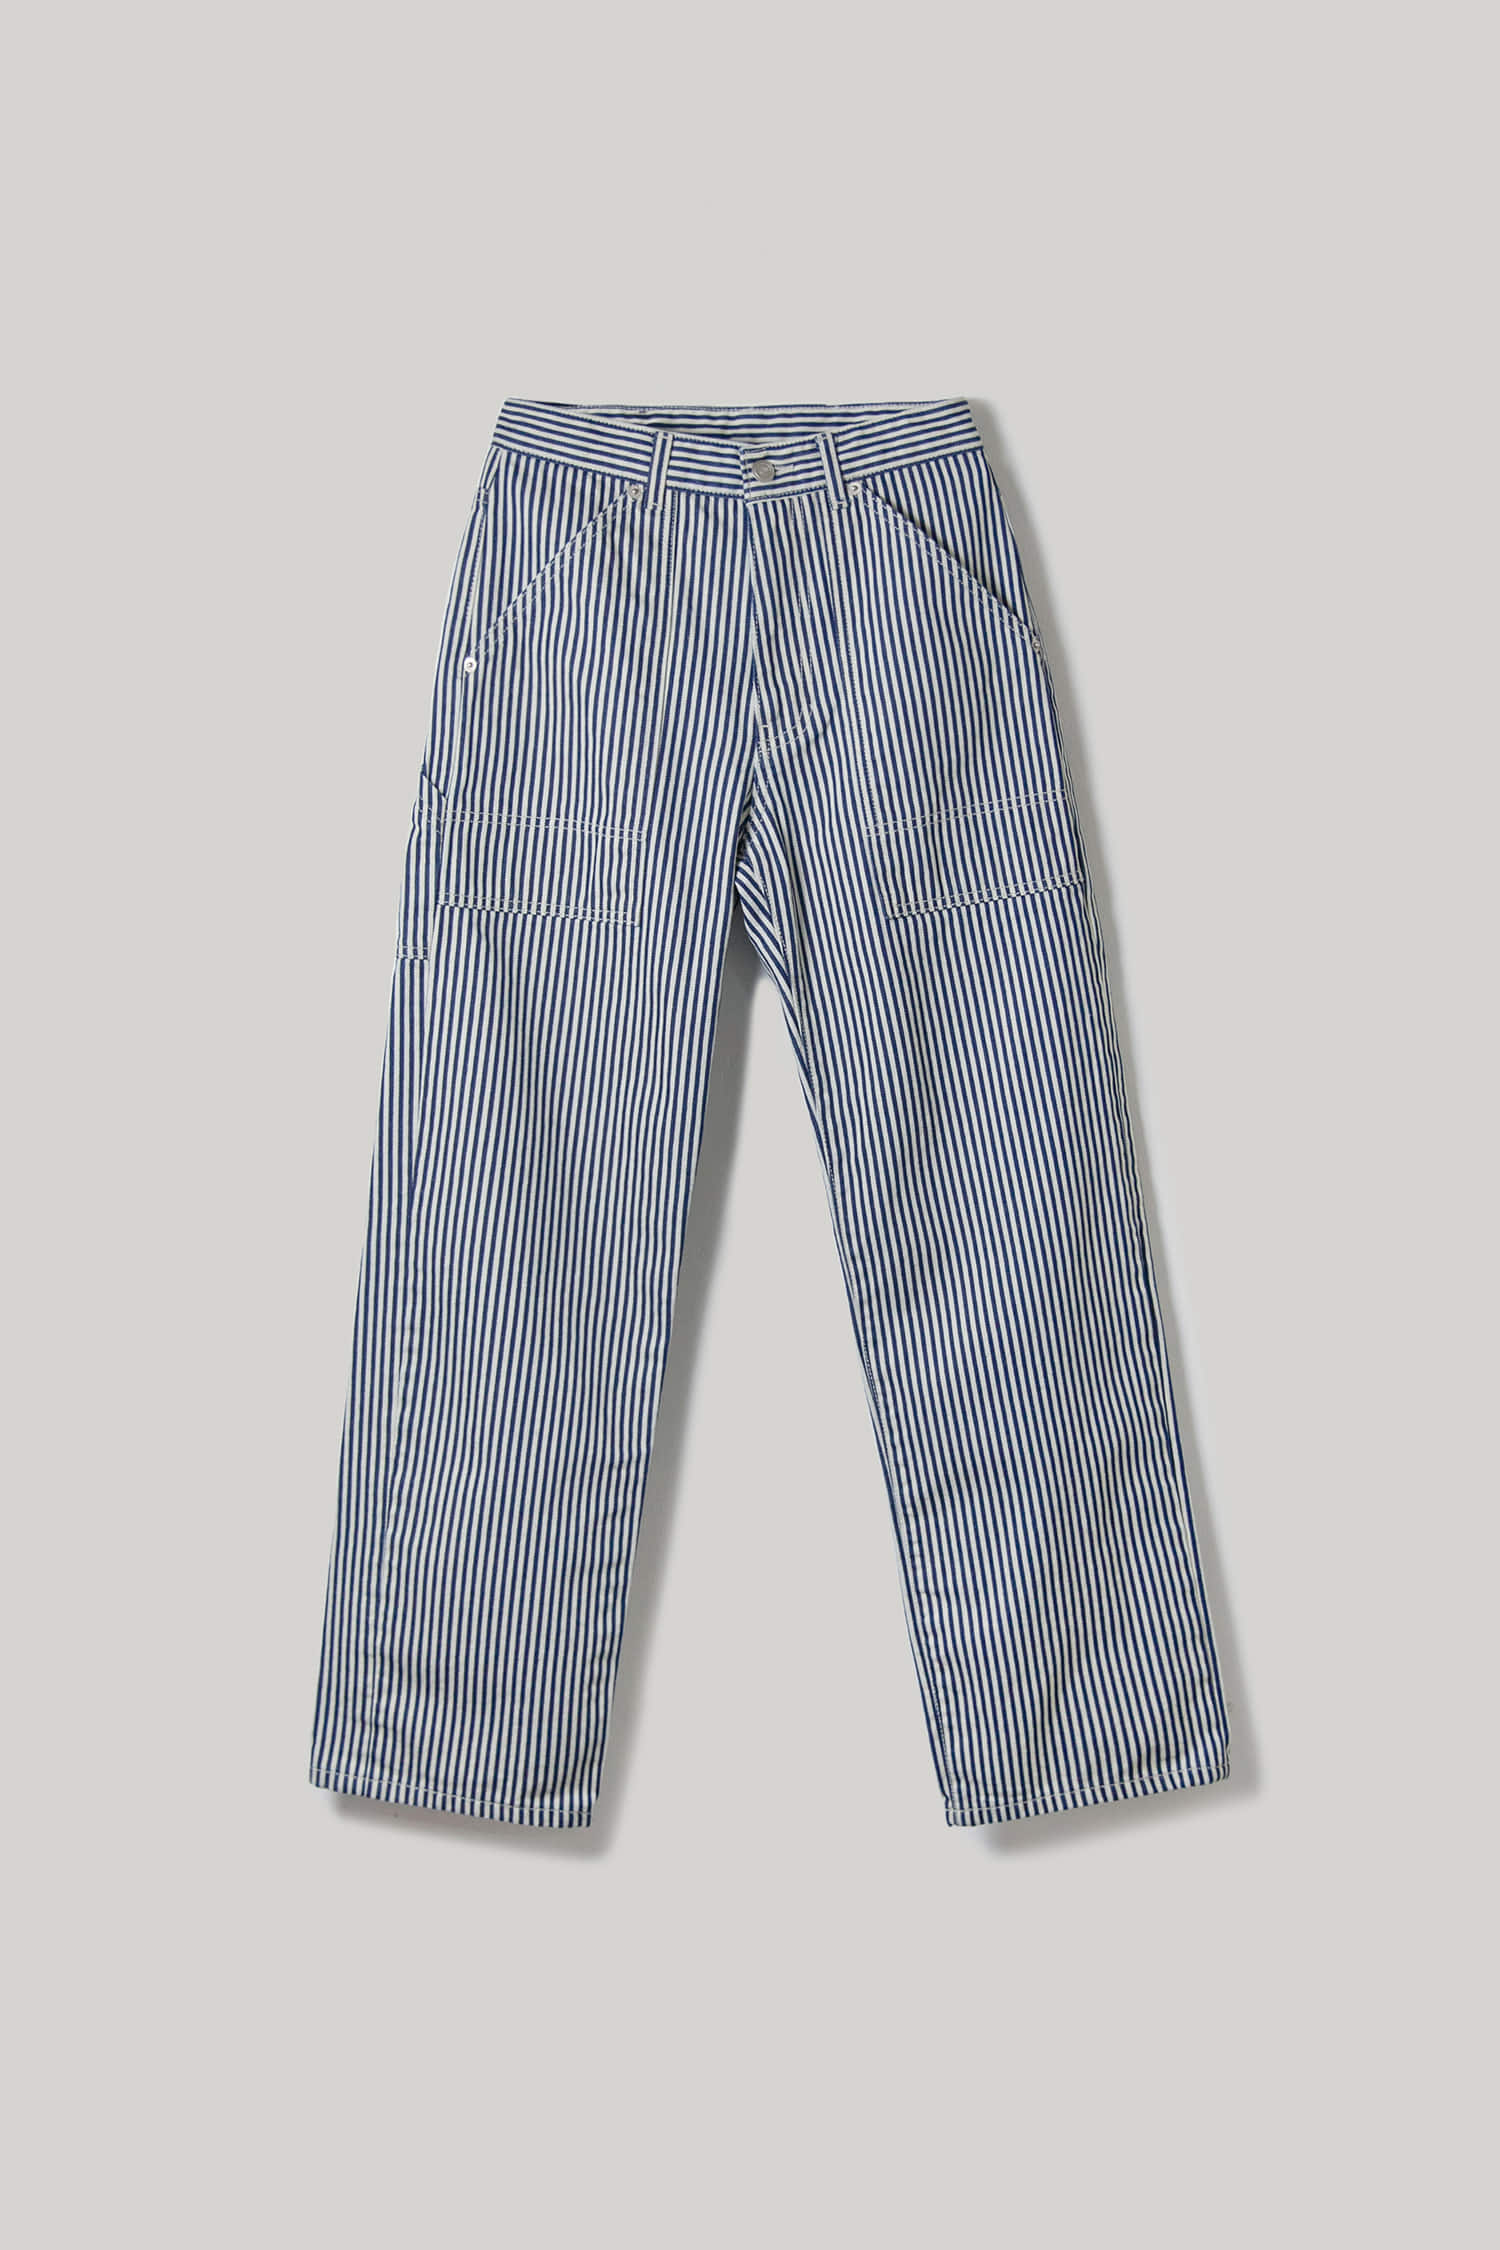 Bon Carpenter Work Denim Pants(Stripe)